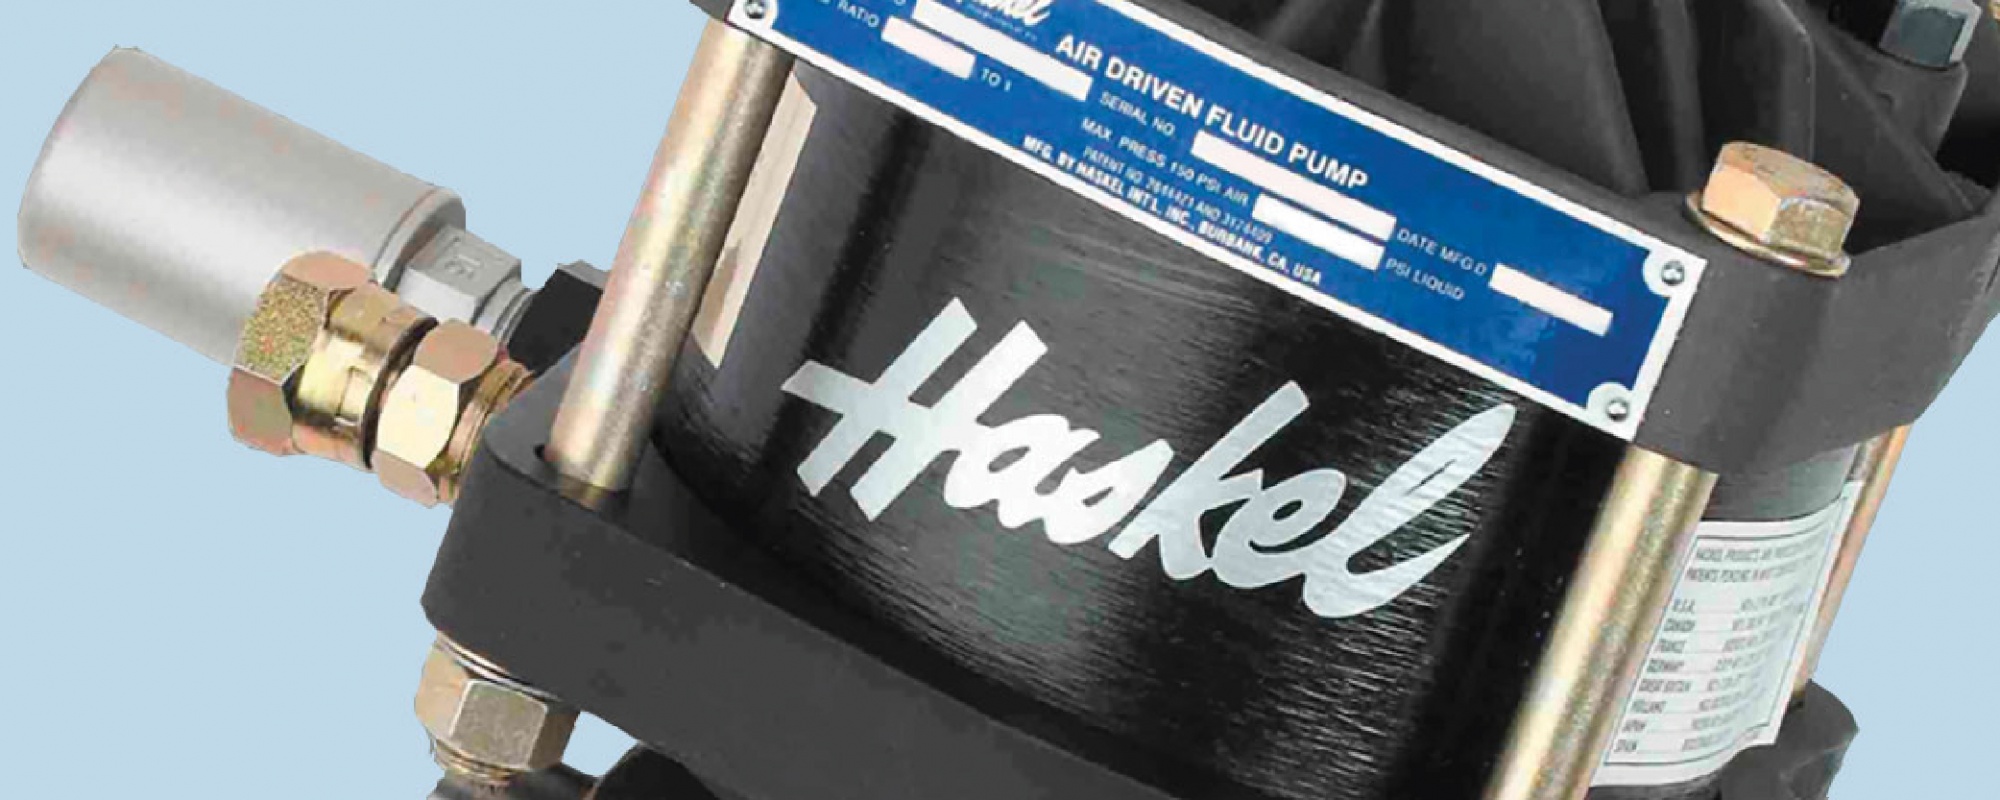 haskel fluid pump2